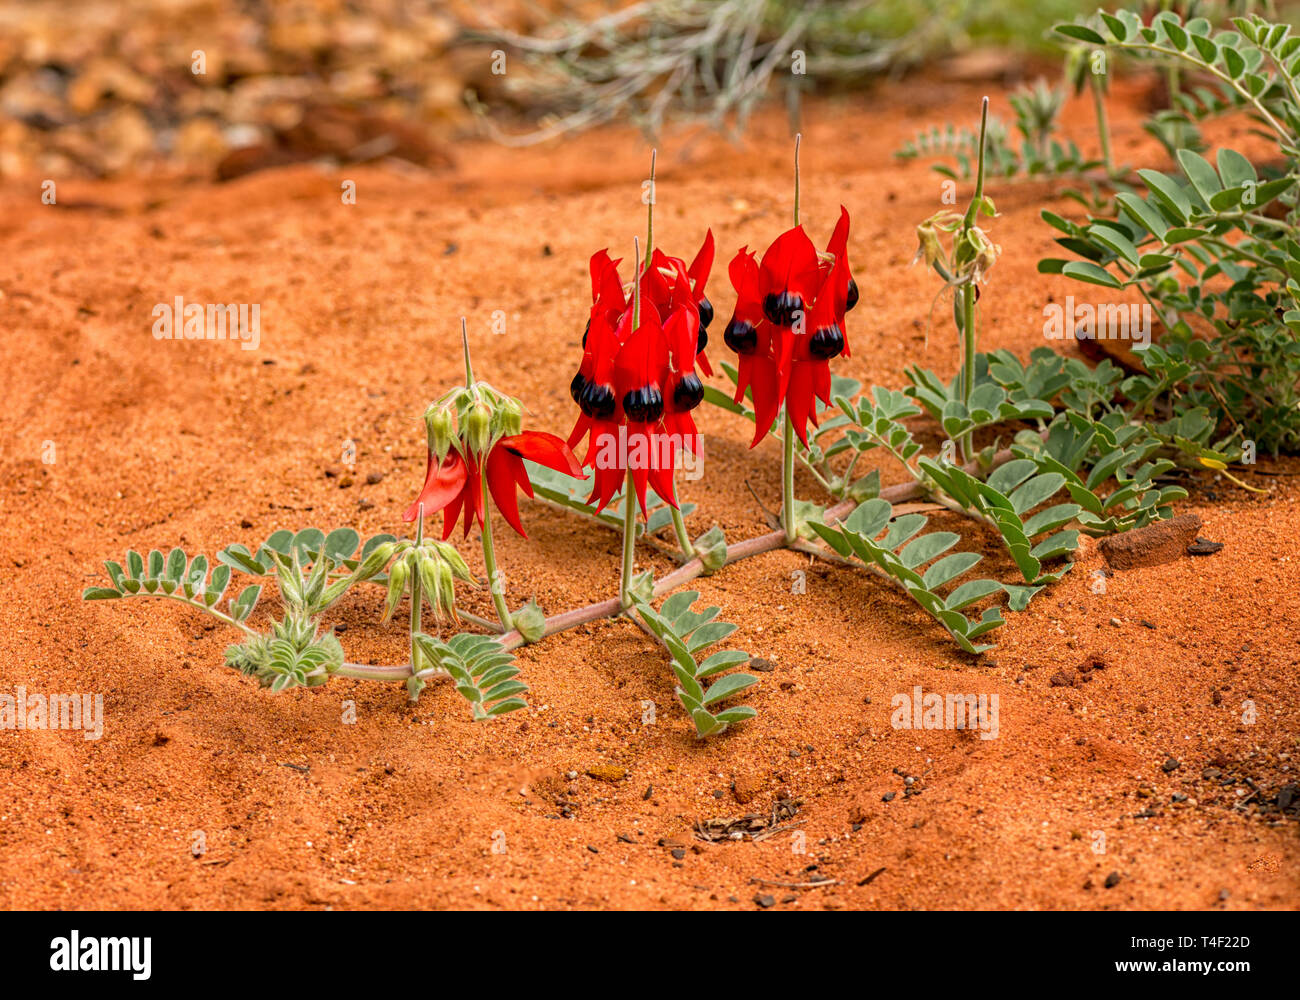 Swainsona formosa, Fabaceae, flower emblem of South Australia often found in the desert. Stock Photo